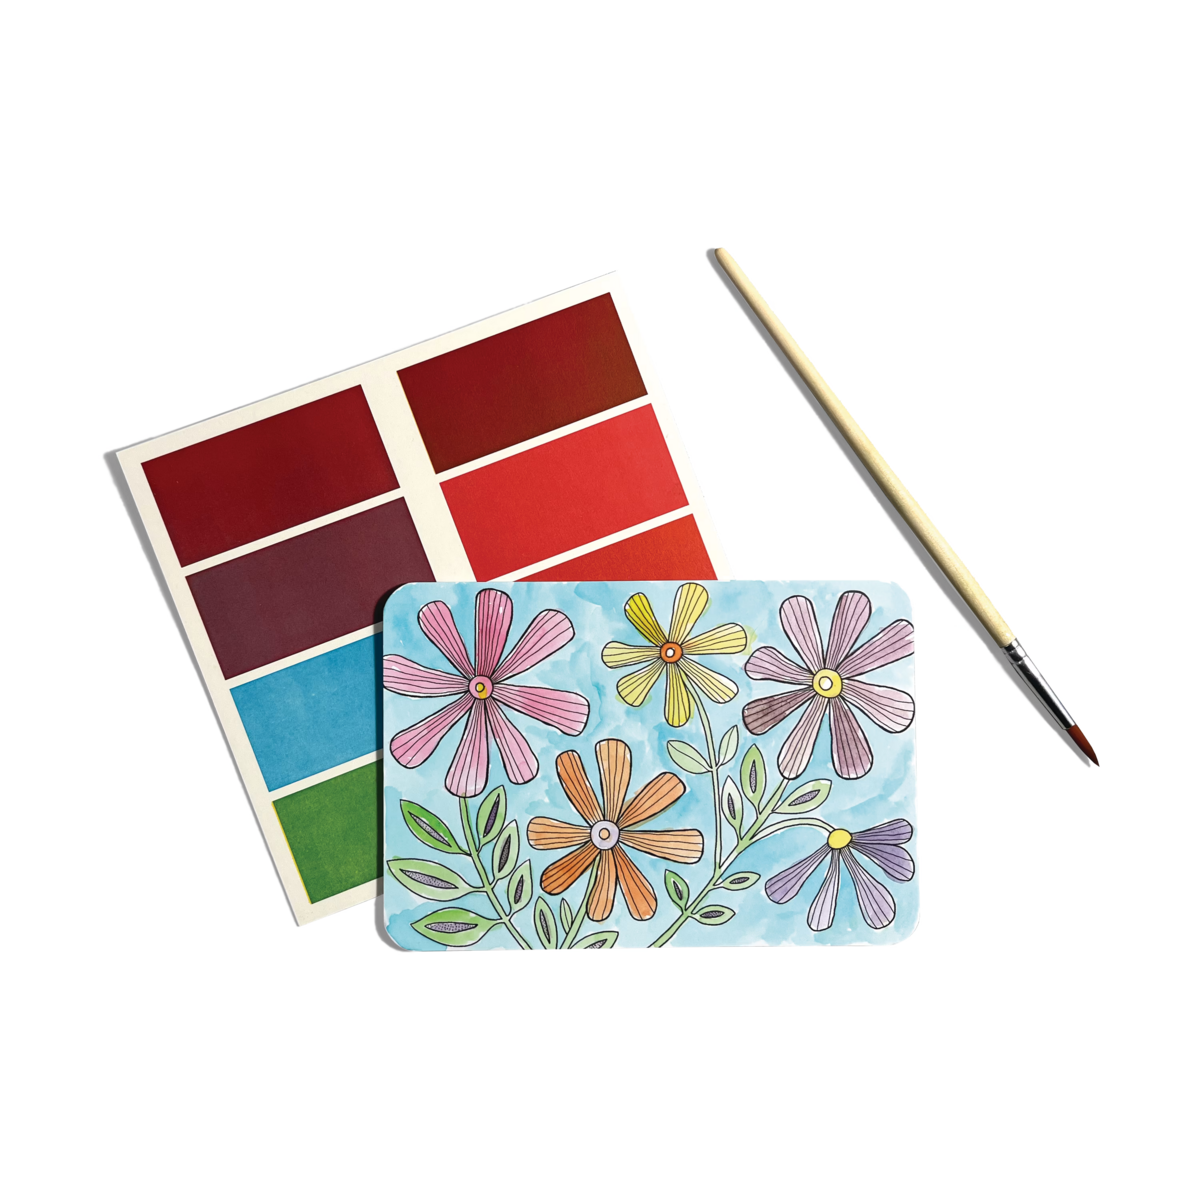  Watercolor Kit for Adults, Floral Watercolors, DIY